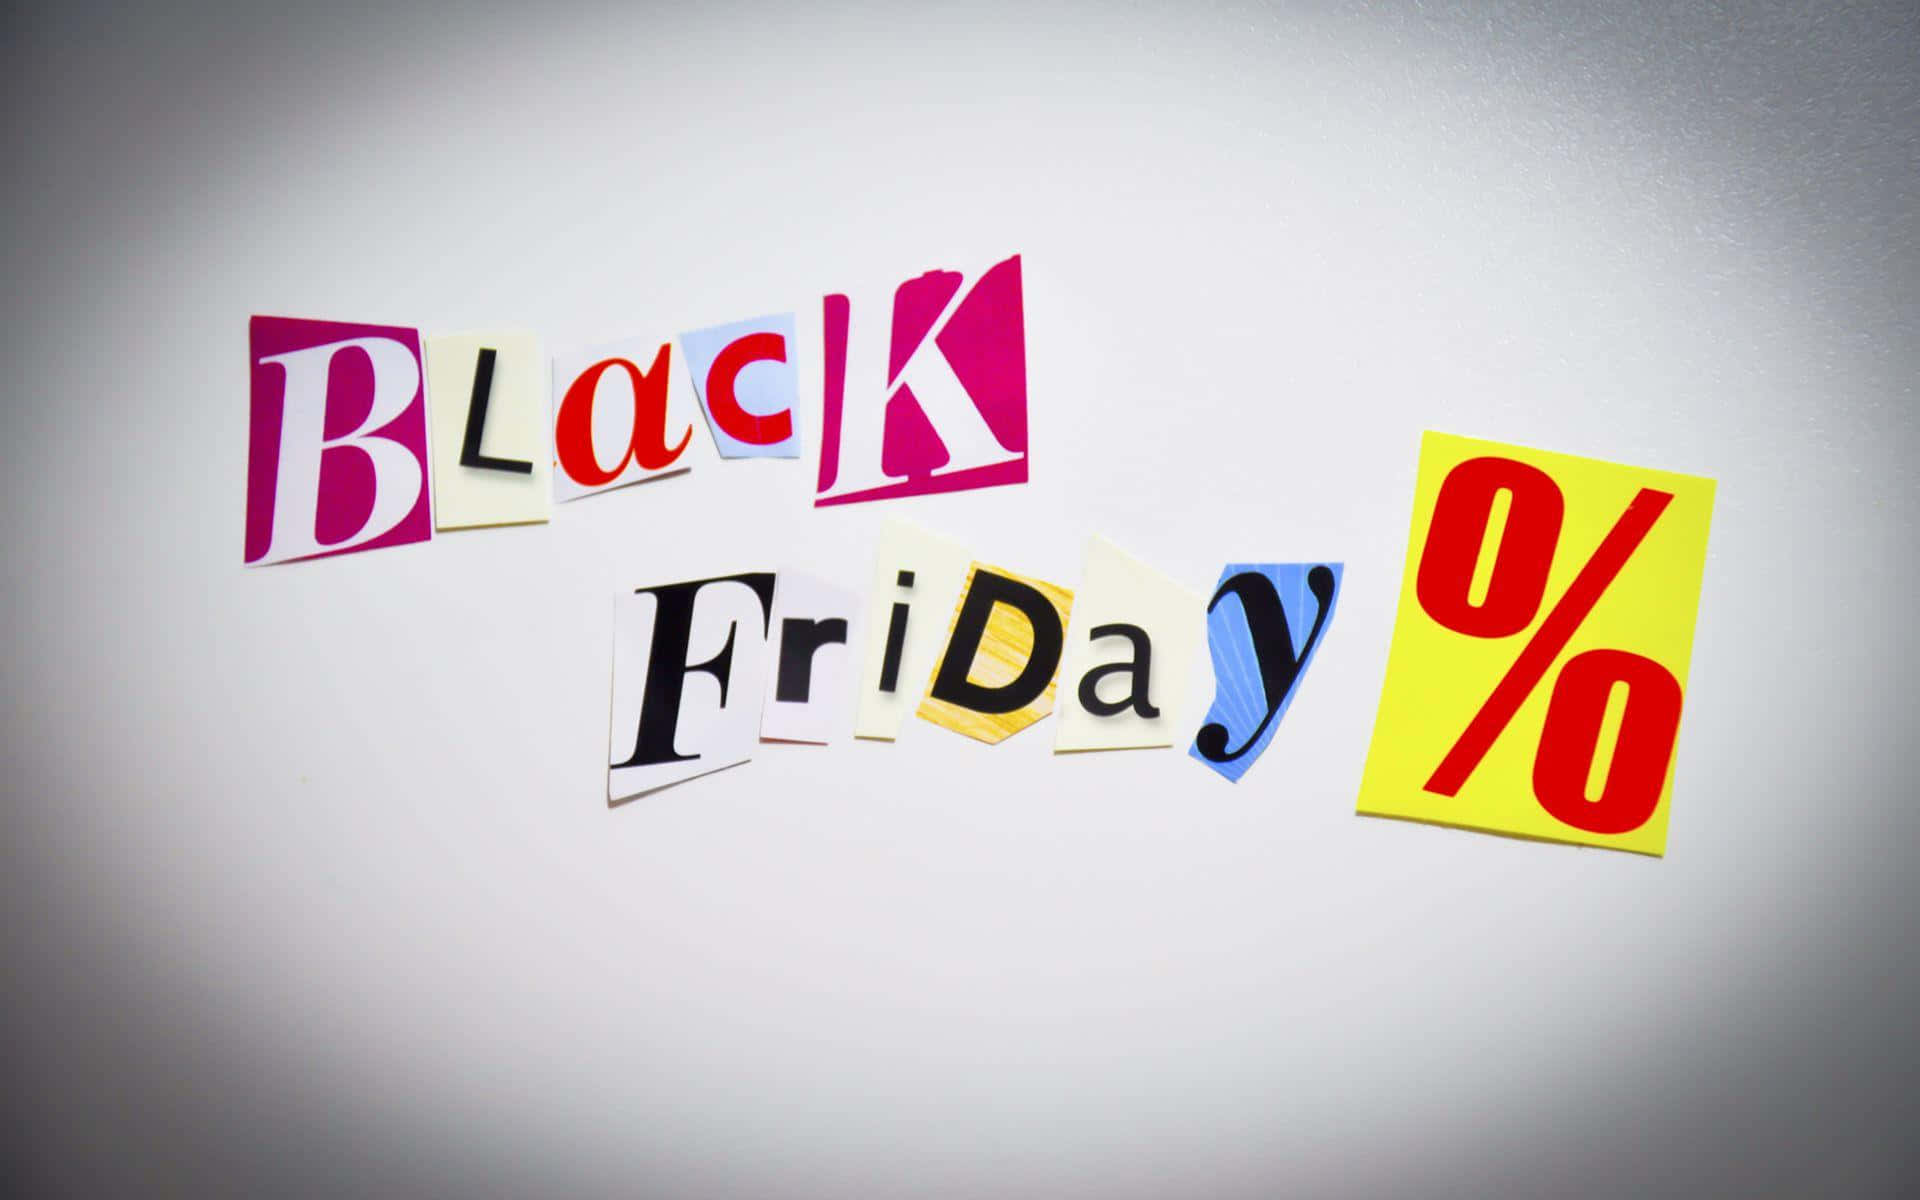 Blackfriday Angebot - Ein Black Friday Angebot